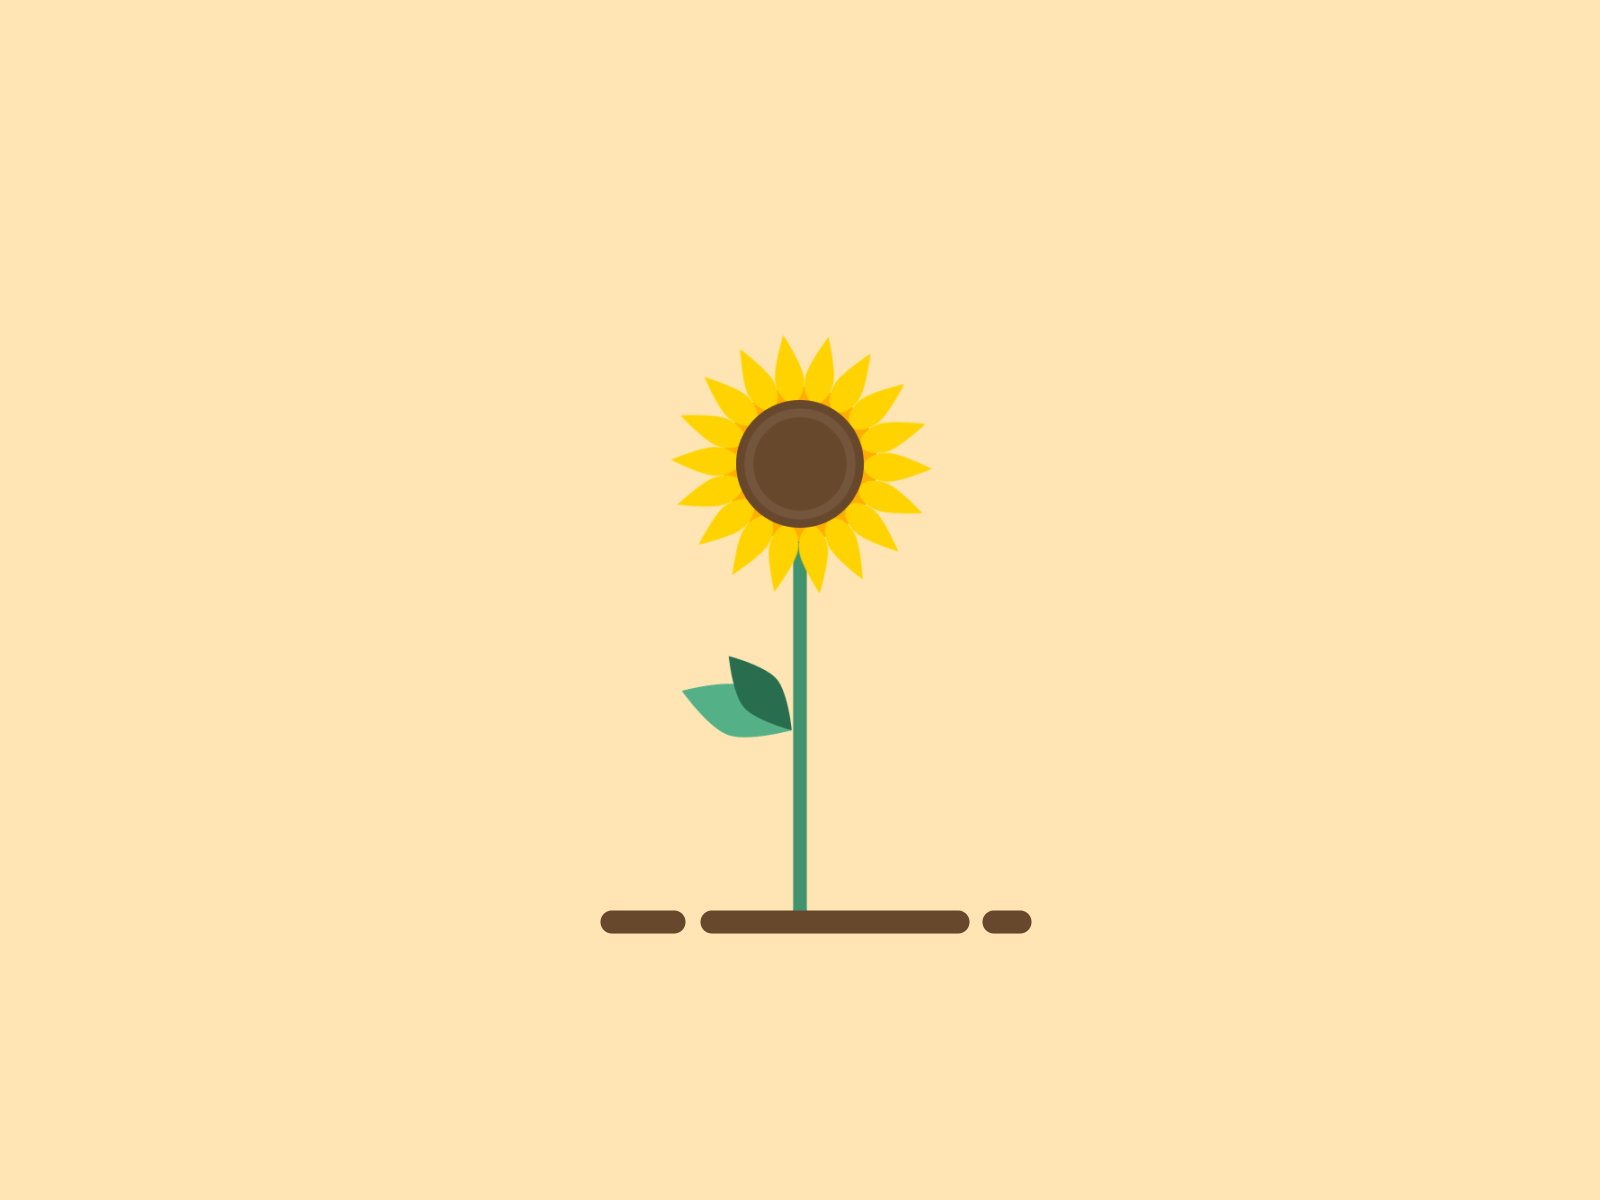 Sunflower by Chloe De'ath on Dribbble